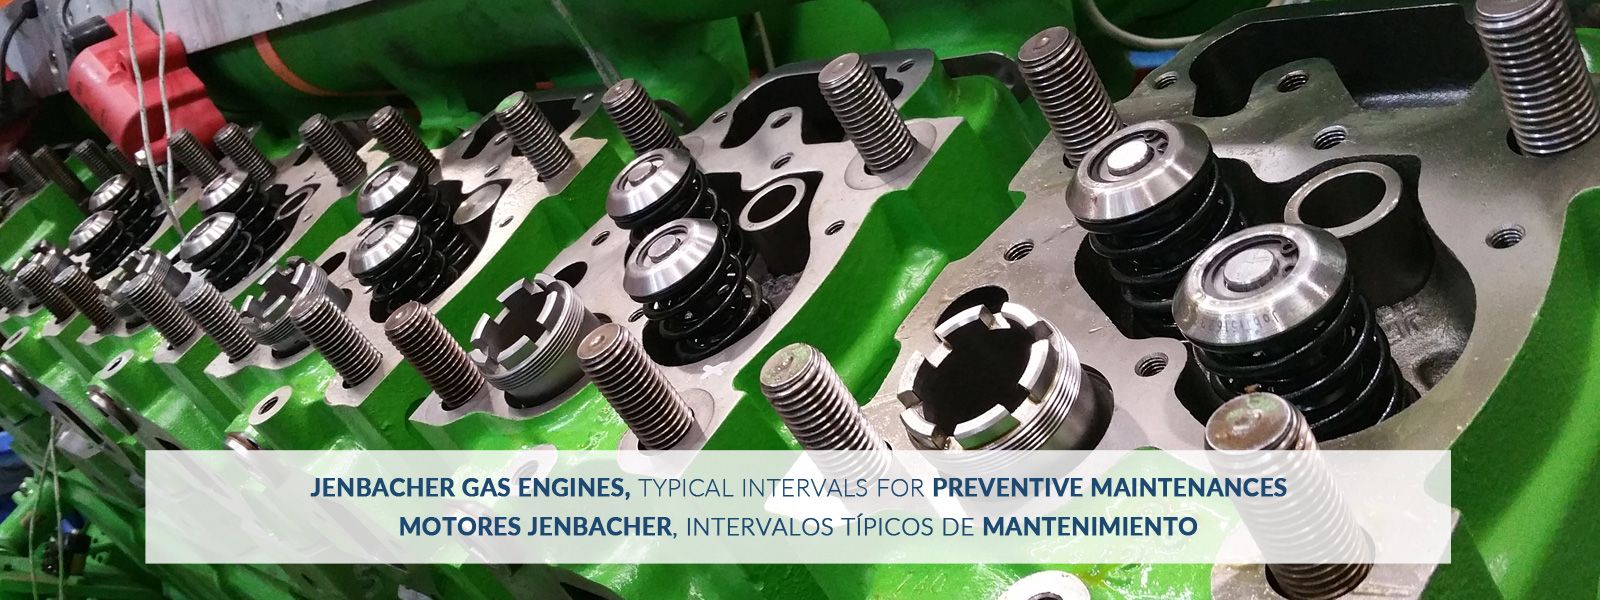 Motores-Jenbacher--intervalos-mantenimiento--Jenbacher-gas-engines-intervals-maintenance